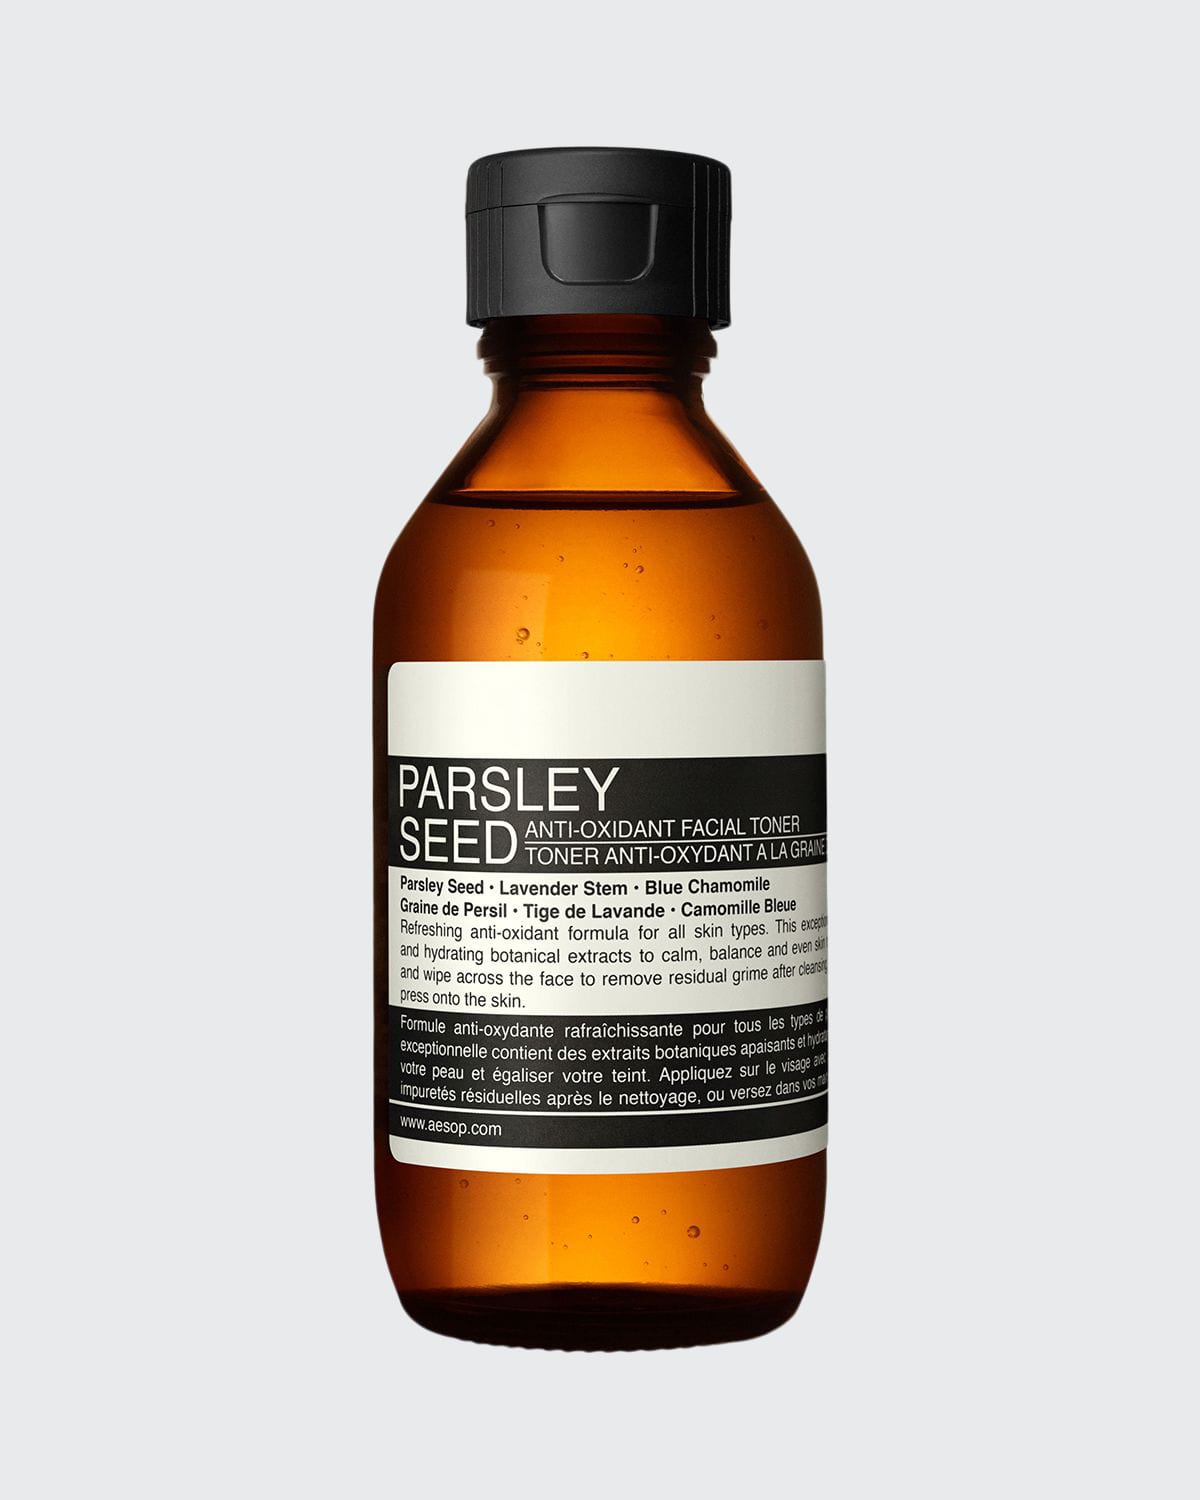 Parsley Seed Anti-Oxidant Facial Toner, 3.4 oz.